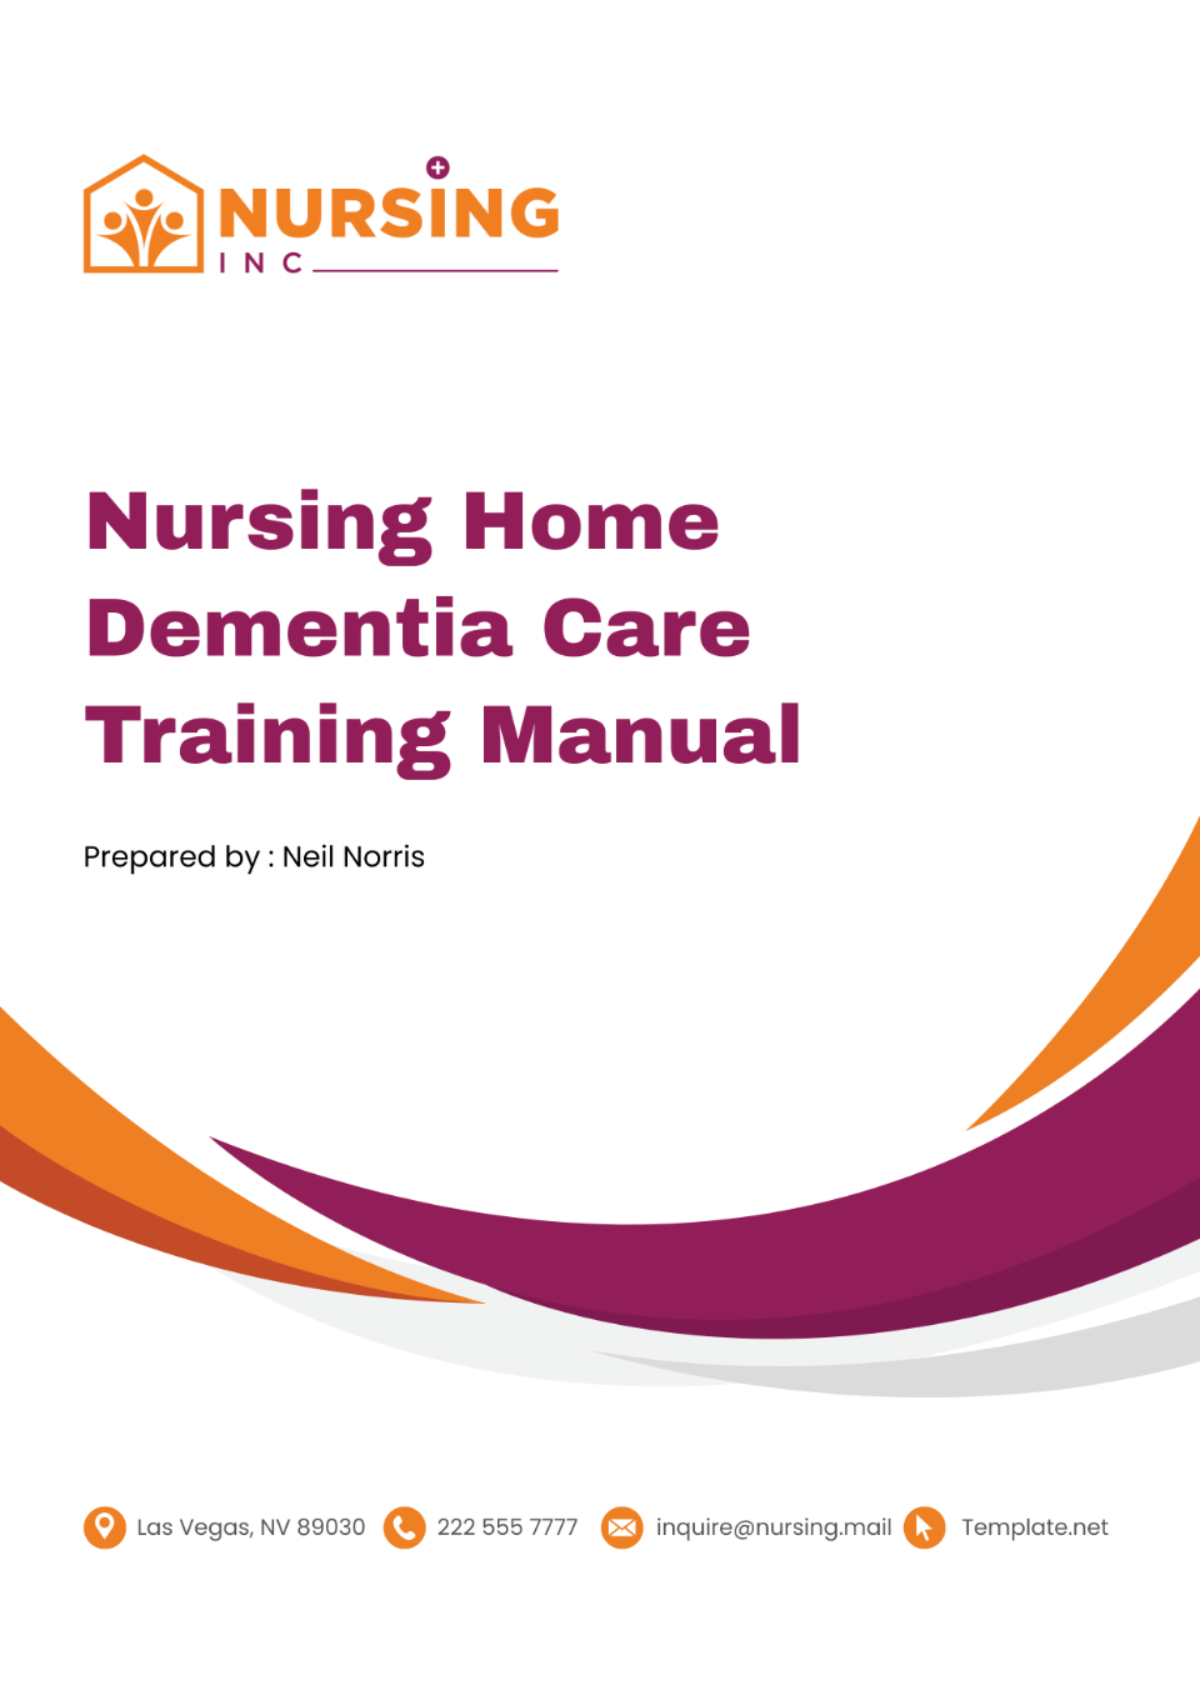 Nursing Home Dementia Care Training Manual Template